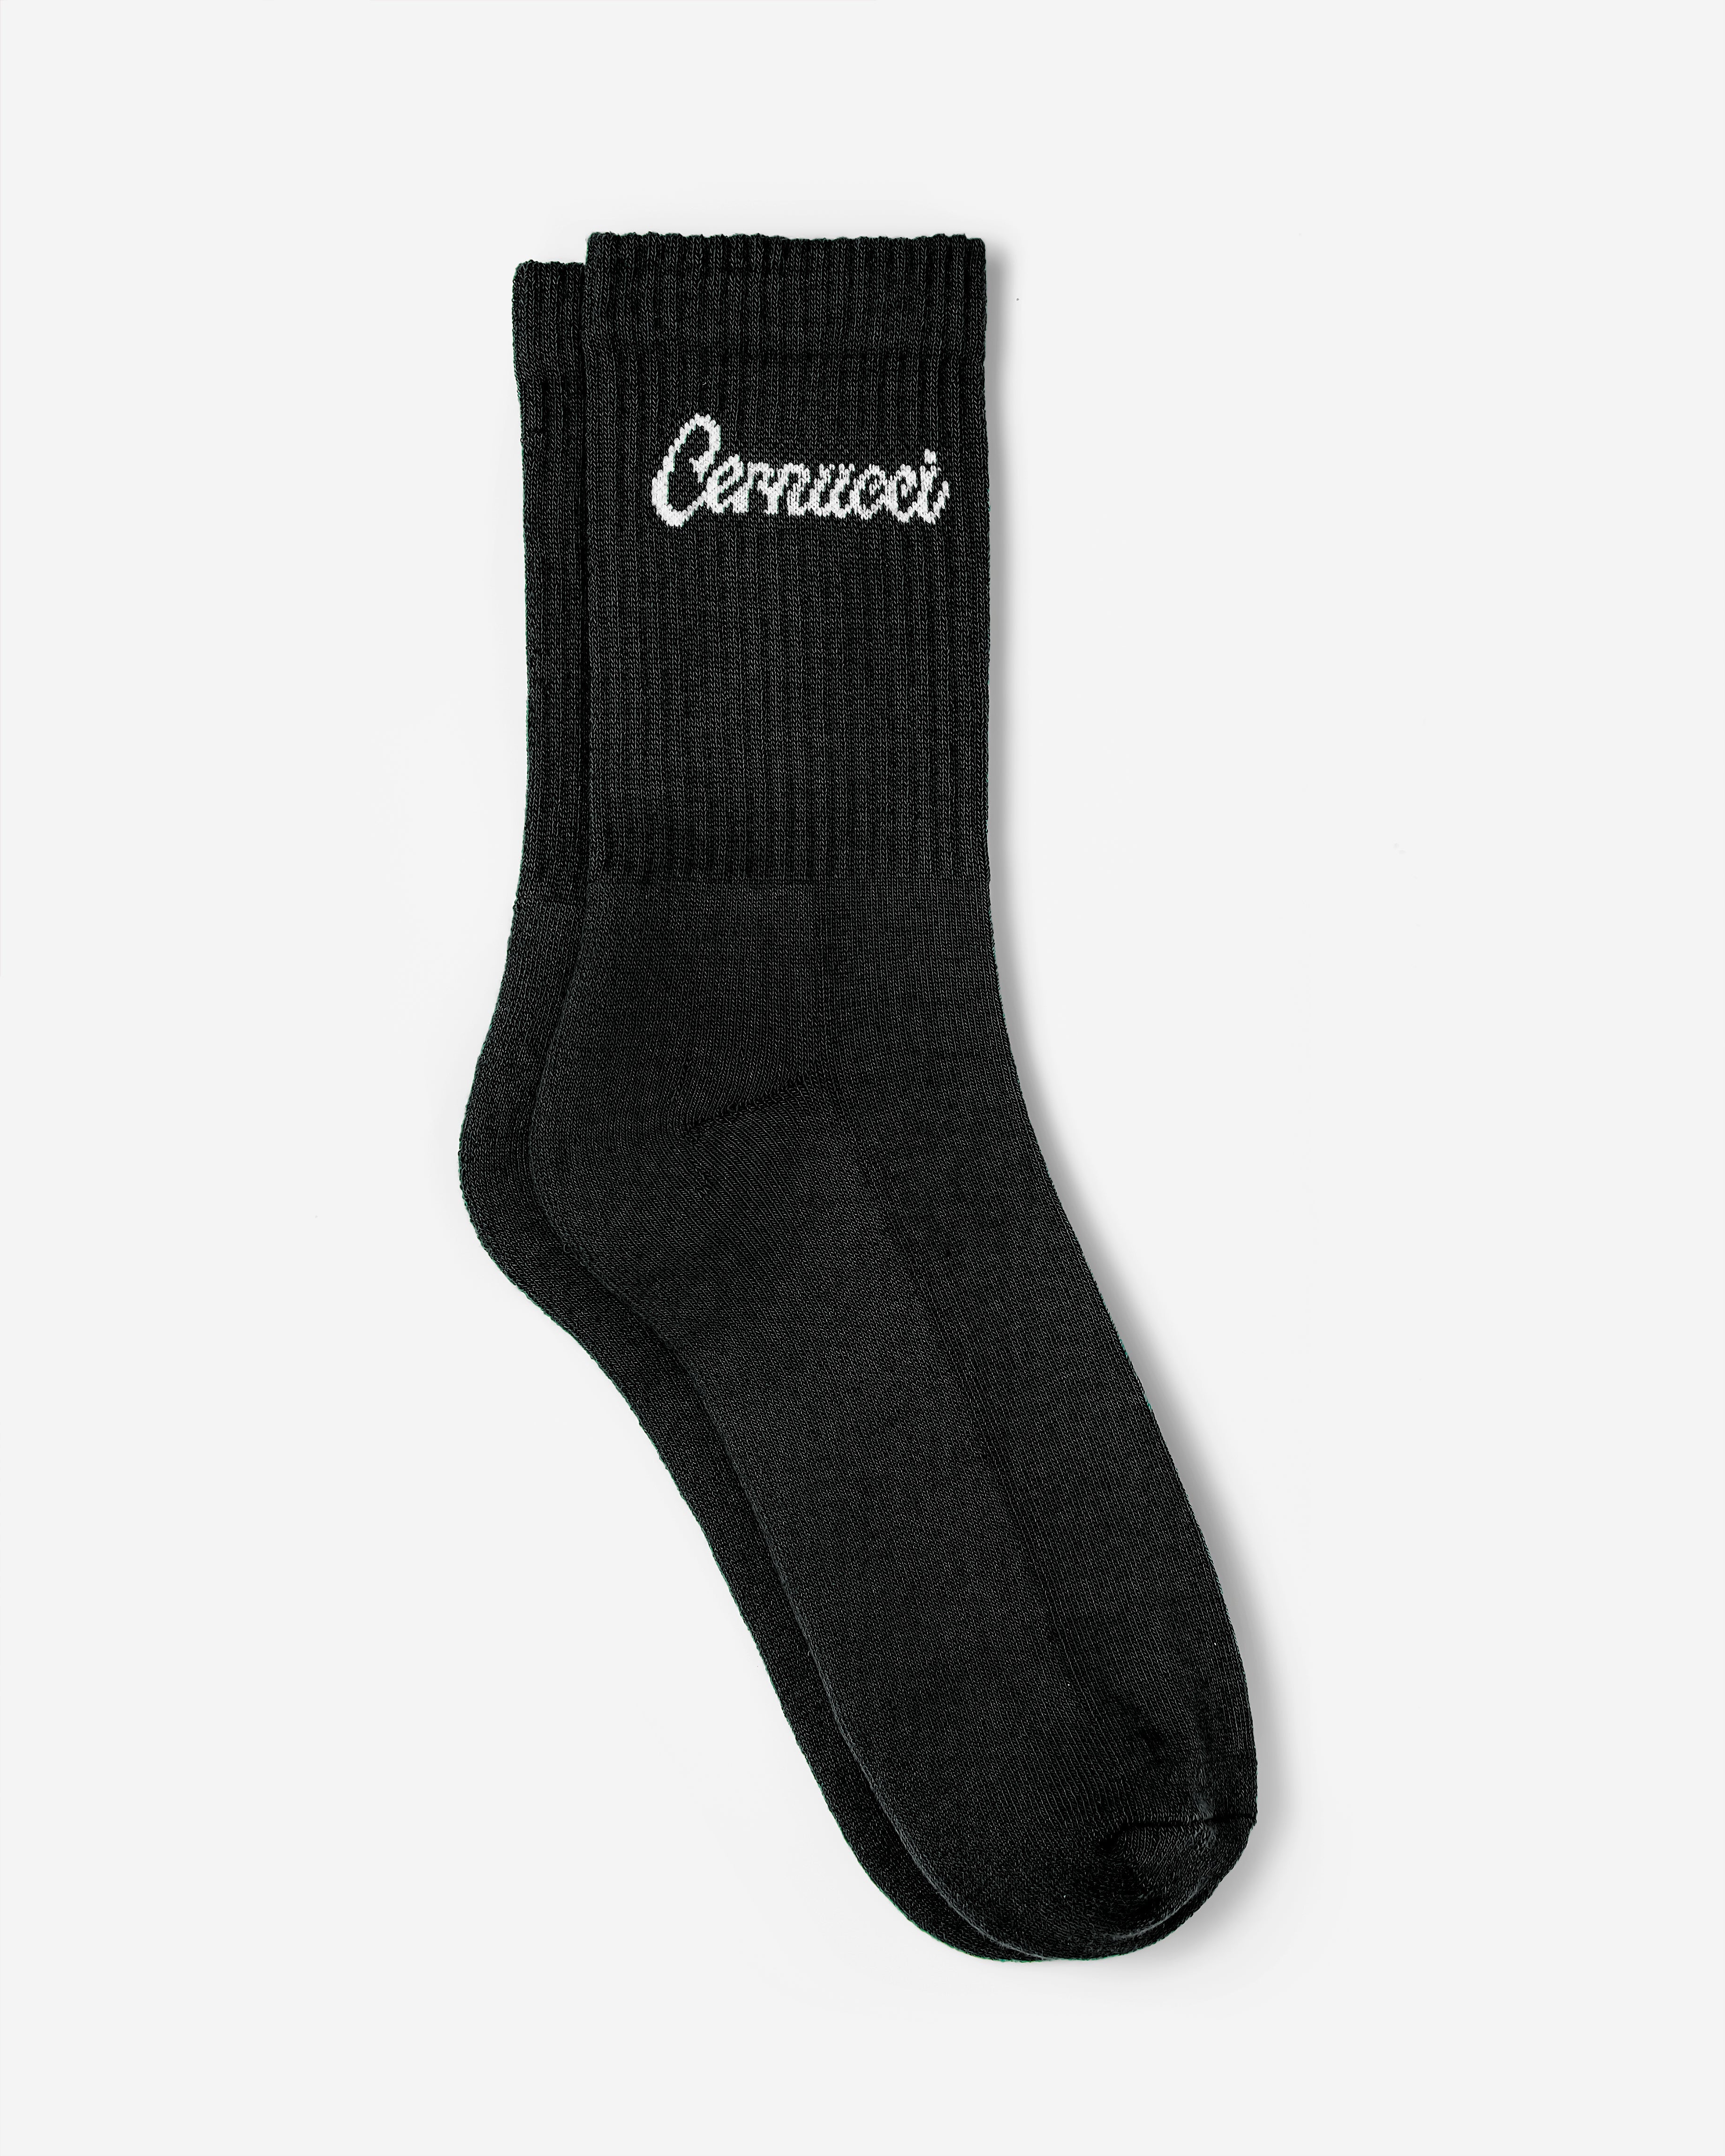 Cernucci Logo Socks - Black – Cernucci US